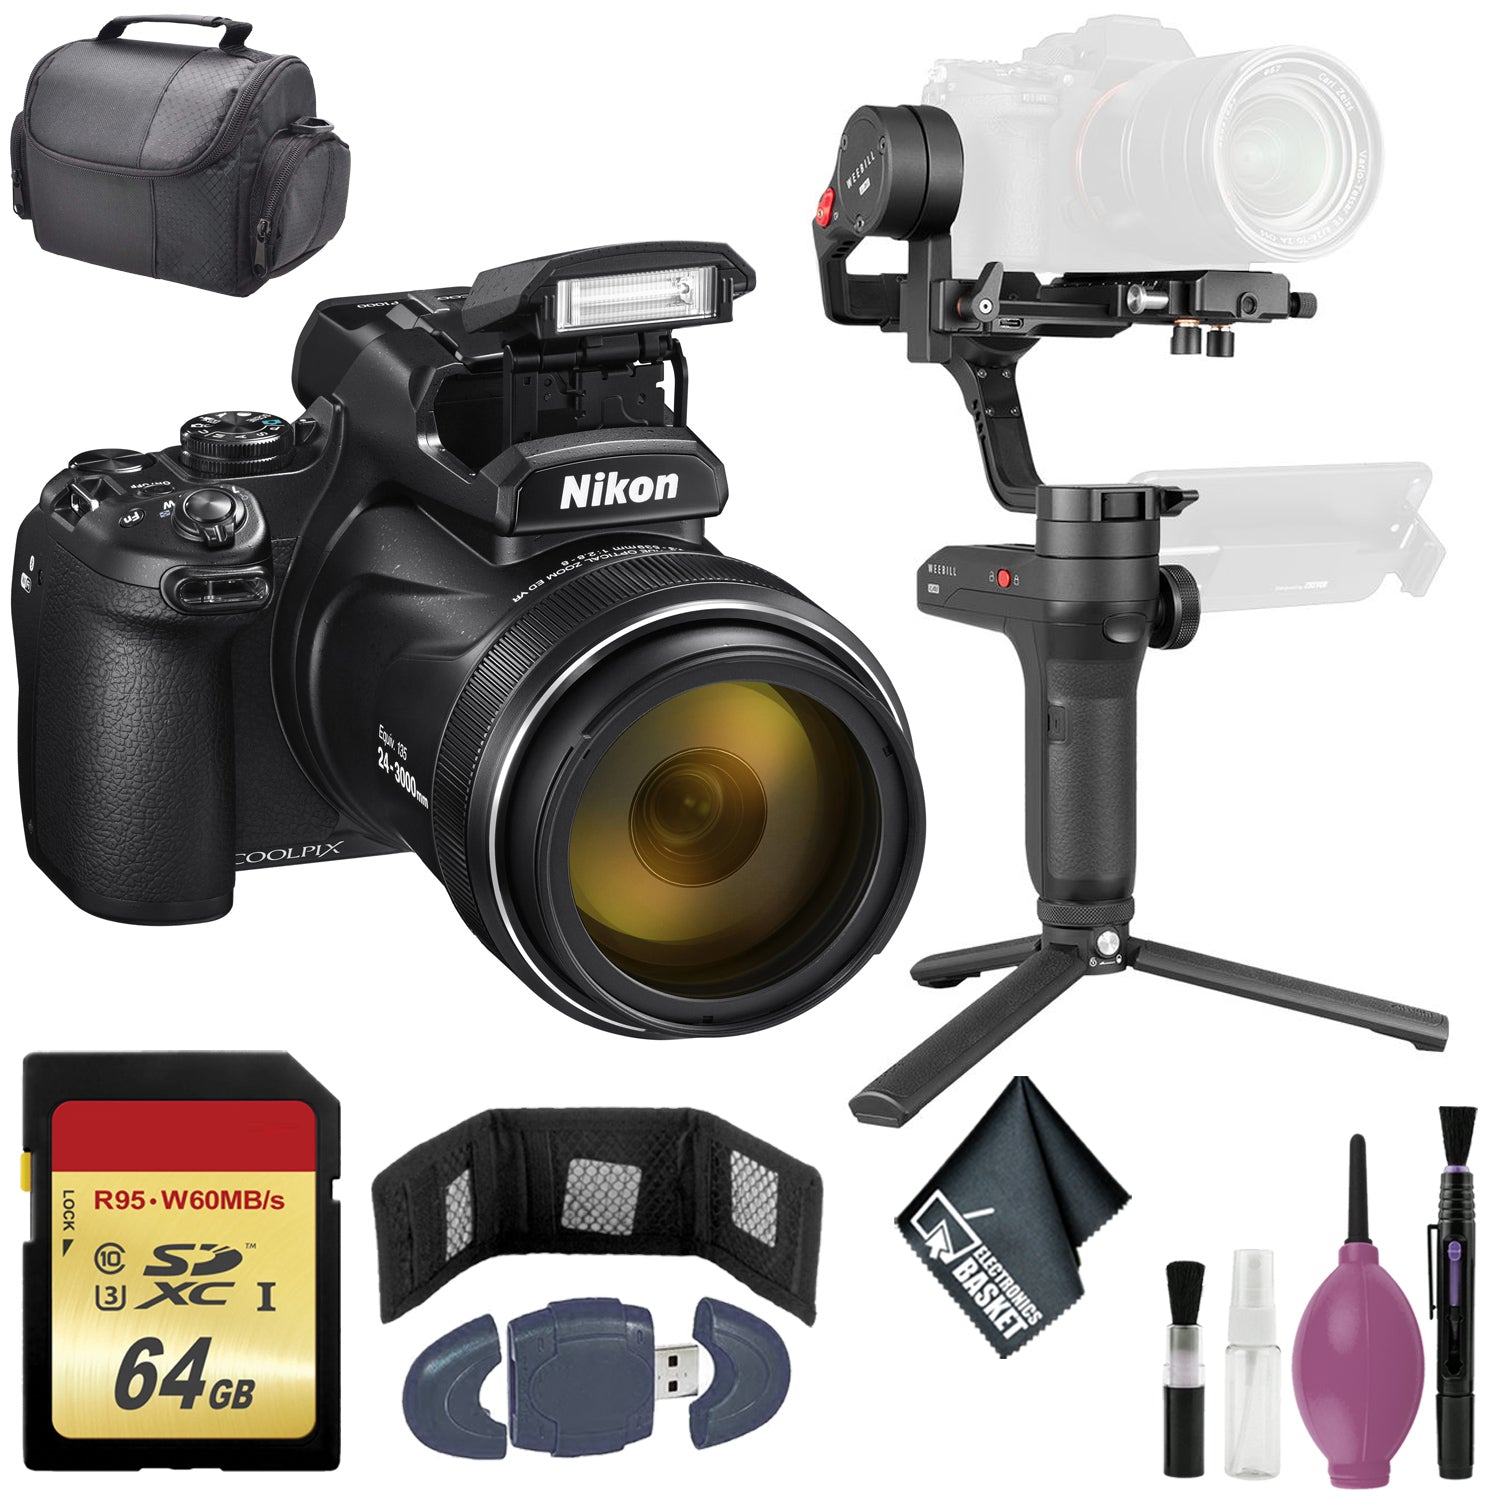 Zhiyun-Tech WEEBILL LAB Handheld Stabilizer - Nikon COOLPIX P1000 Digital Camera - 64GB Case